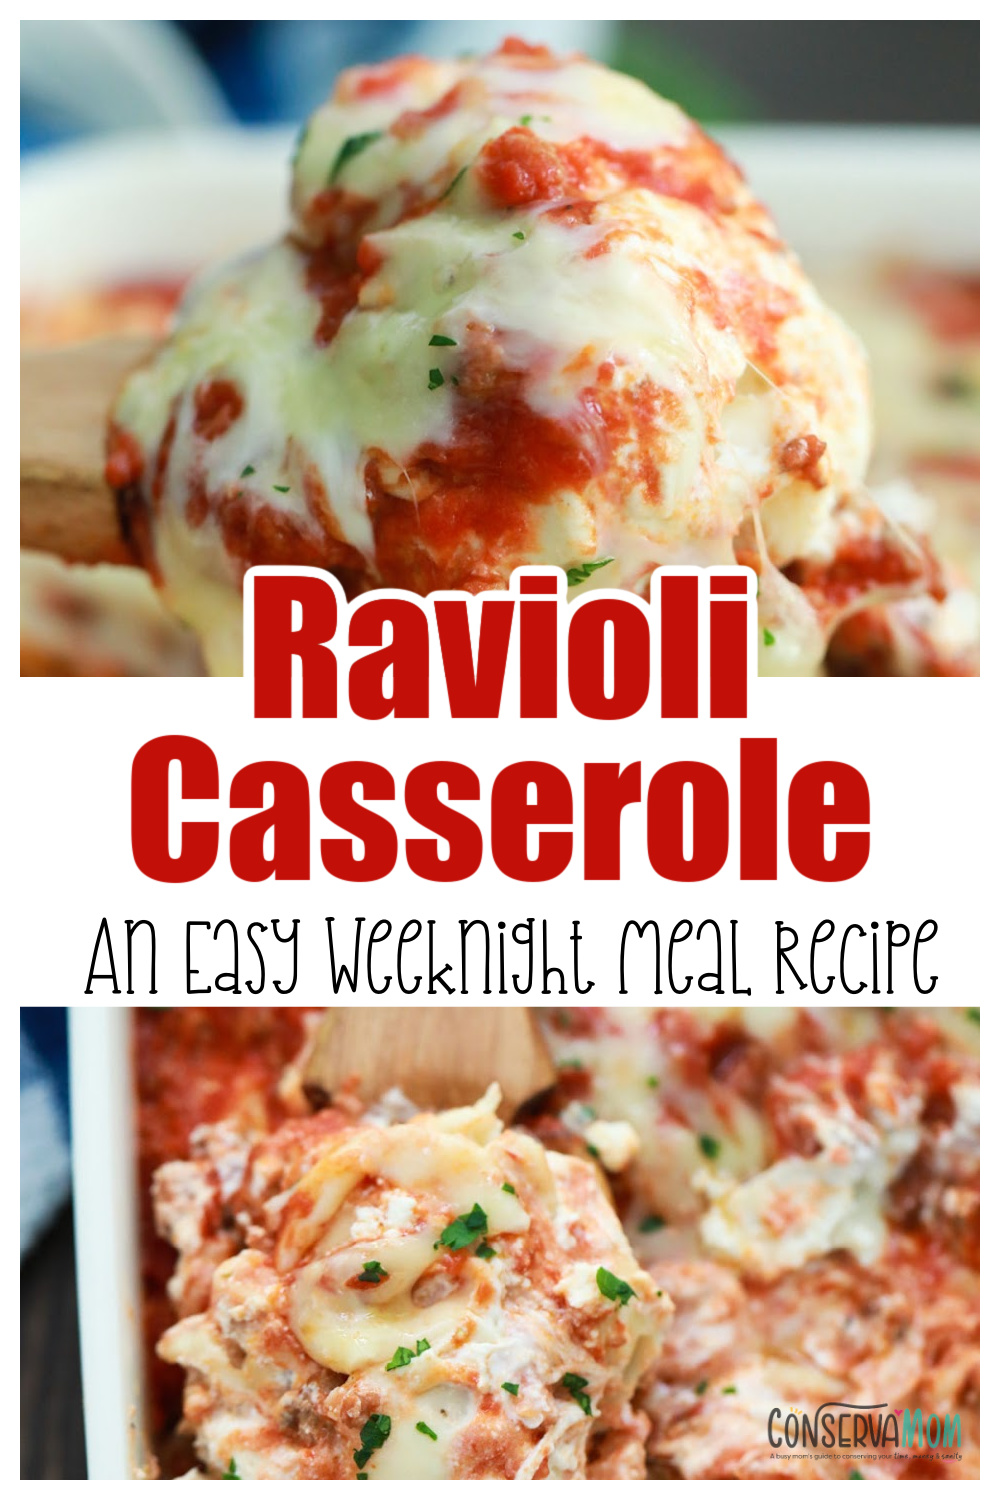 Ravioli casserole: An Easy meal recipe